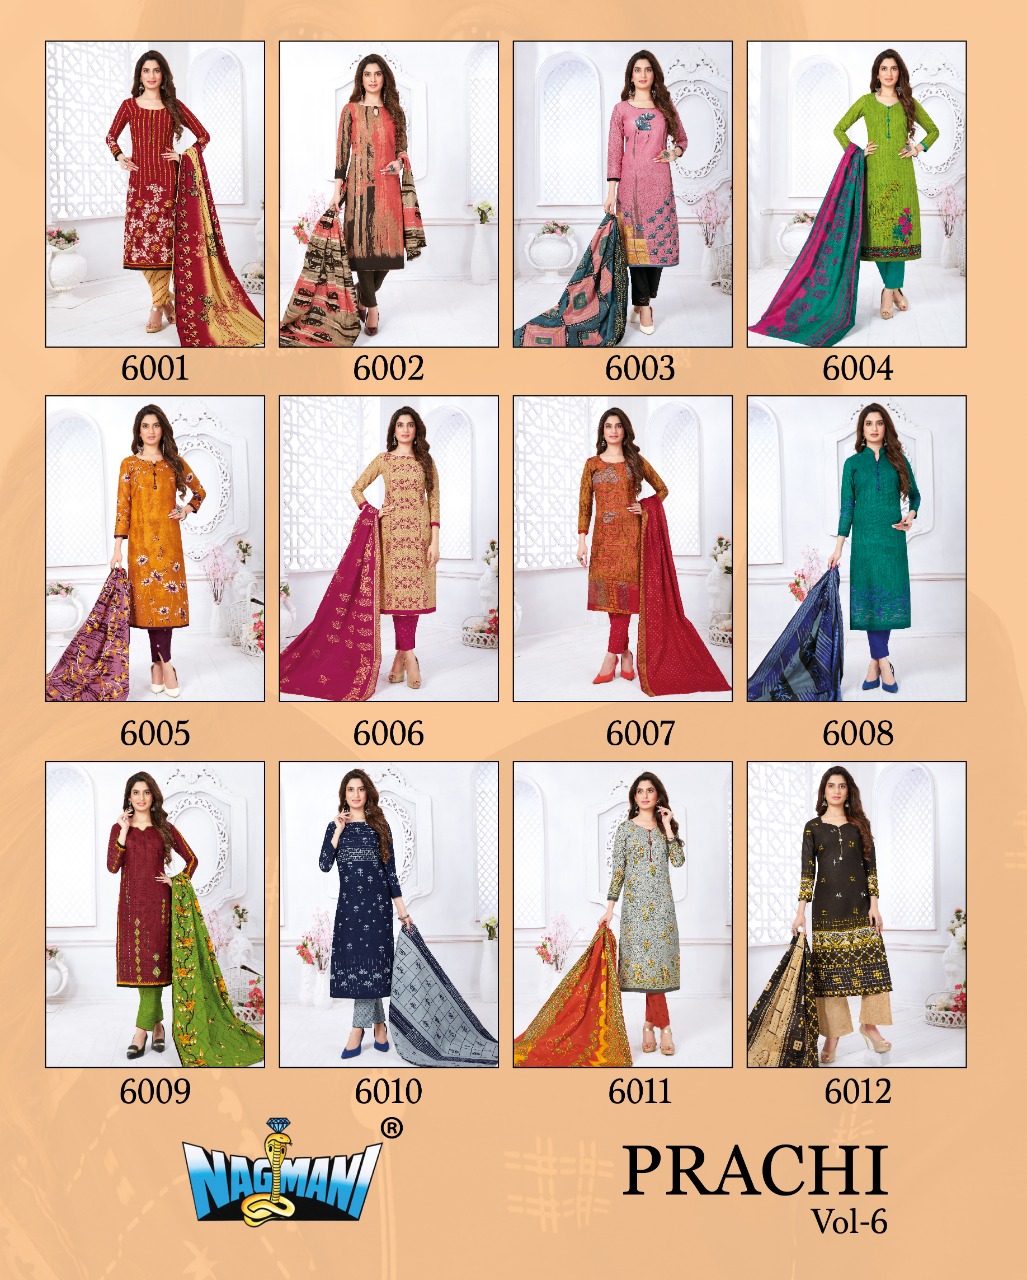 Nagmani Prachi Vol 6 Series 6001-6012 Printed Pure Cotton Suit